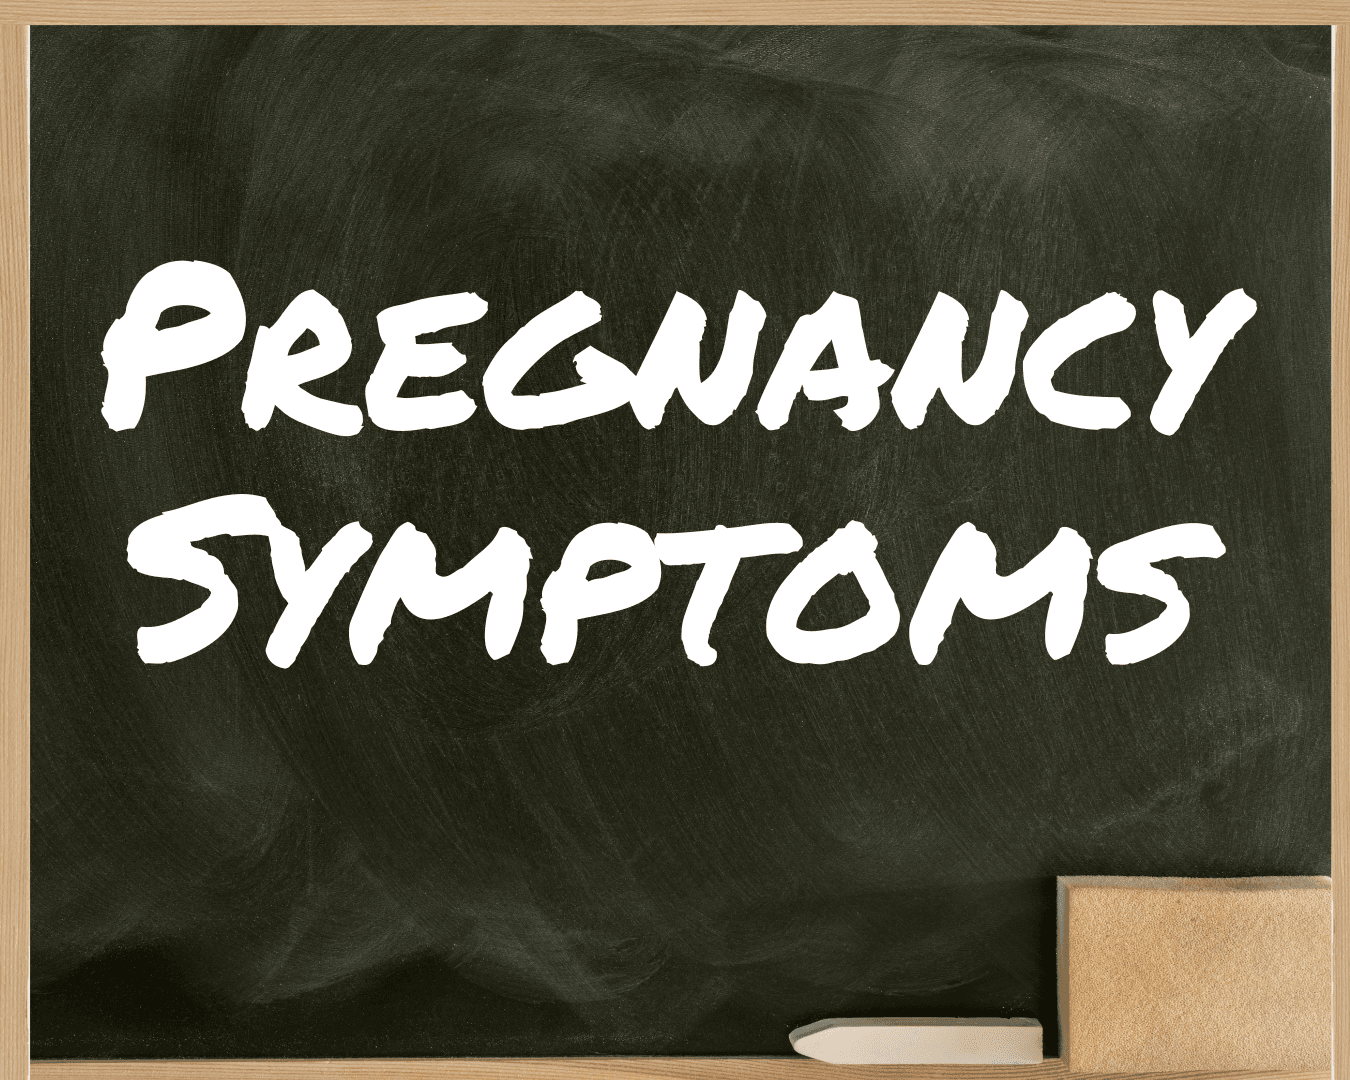 Did You Know: Pregnancy Symptoms